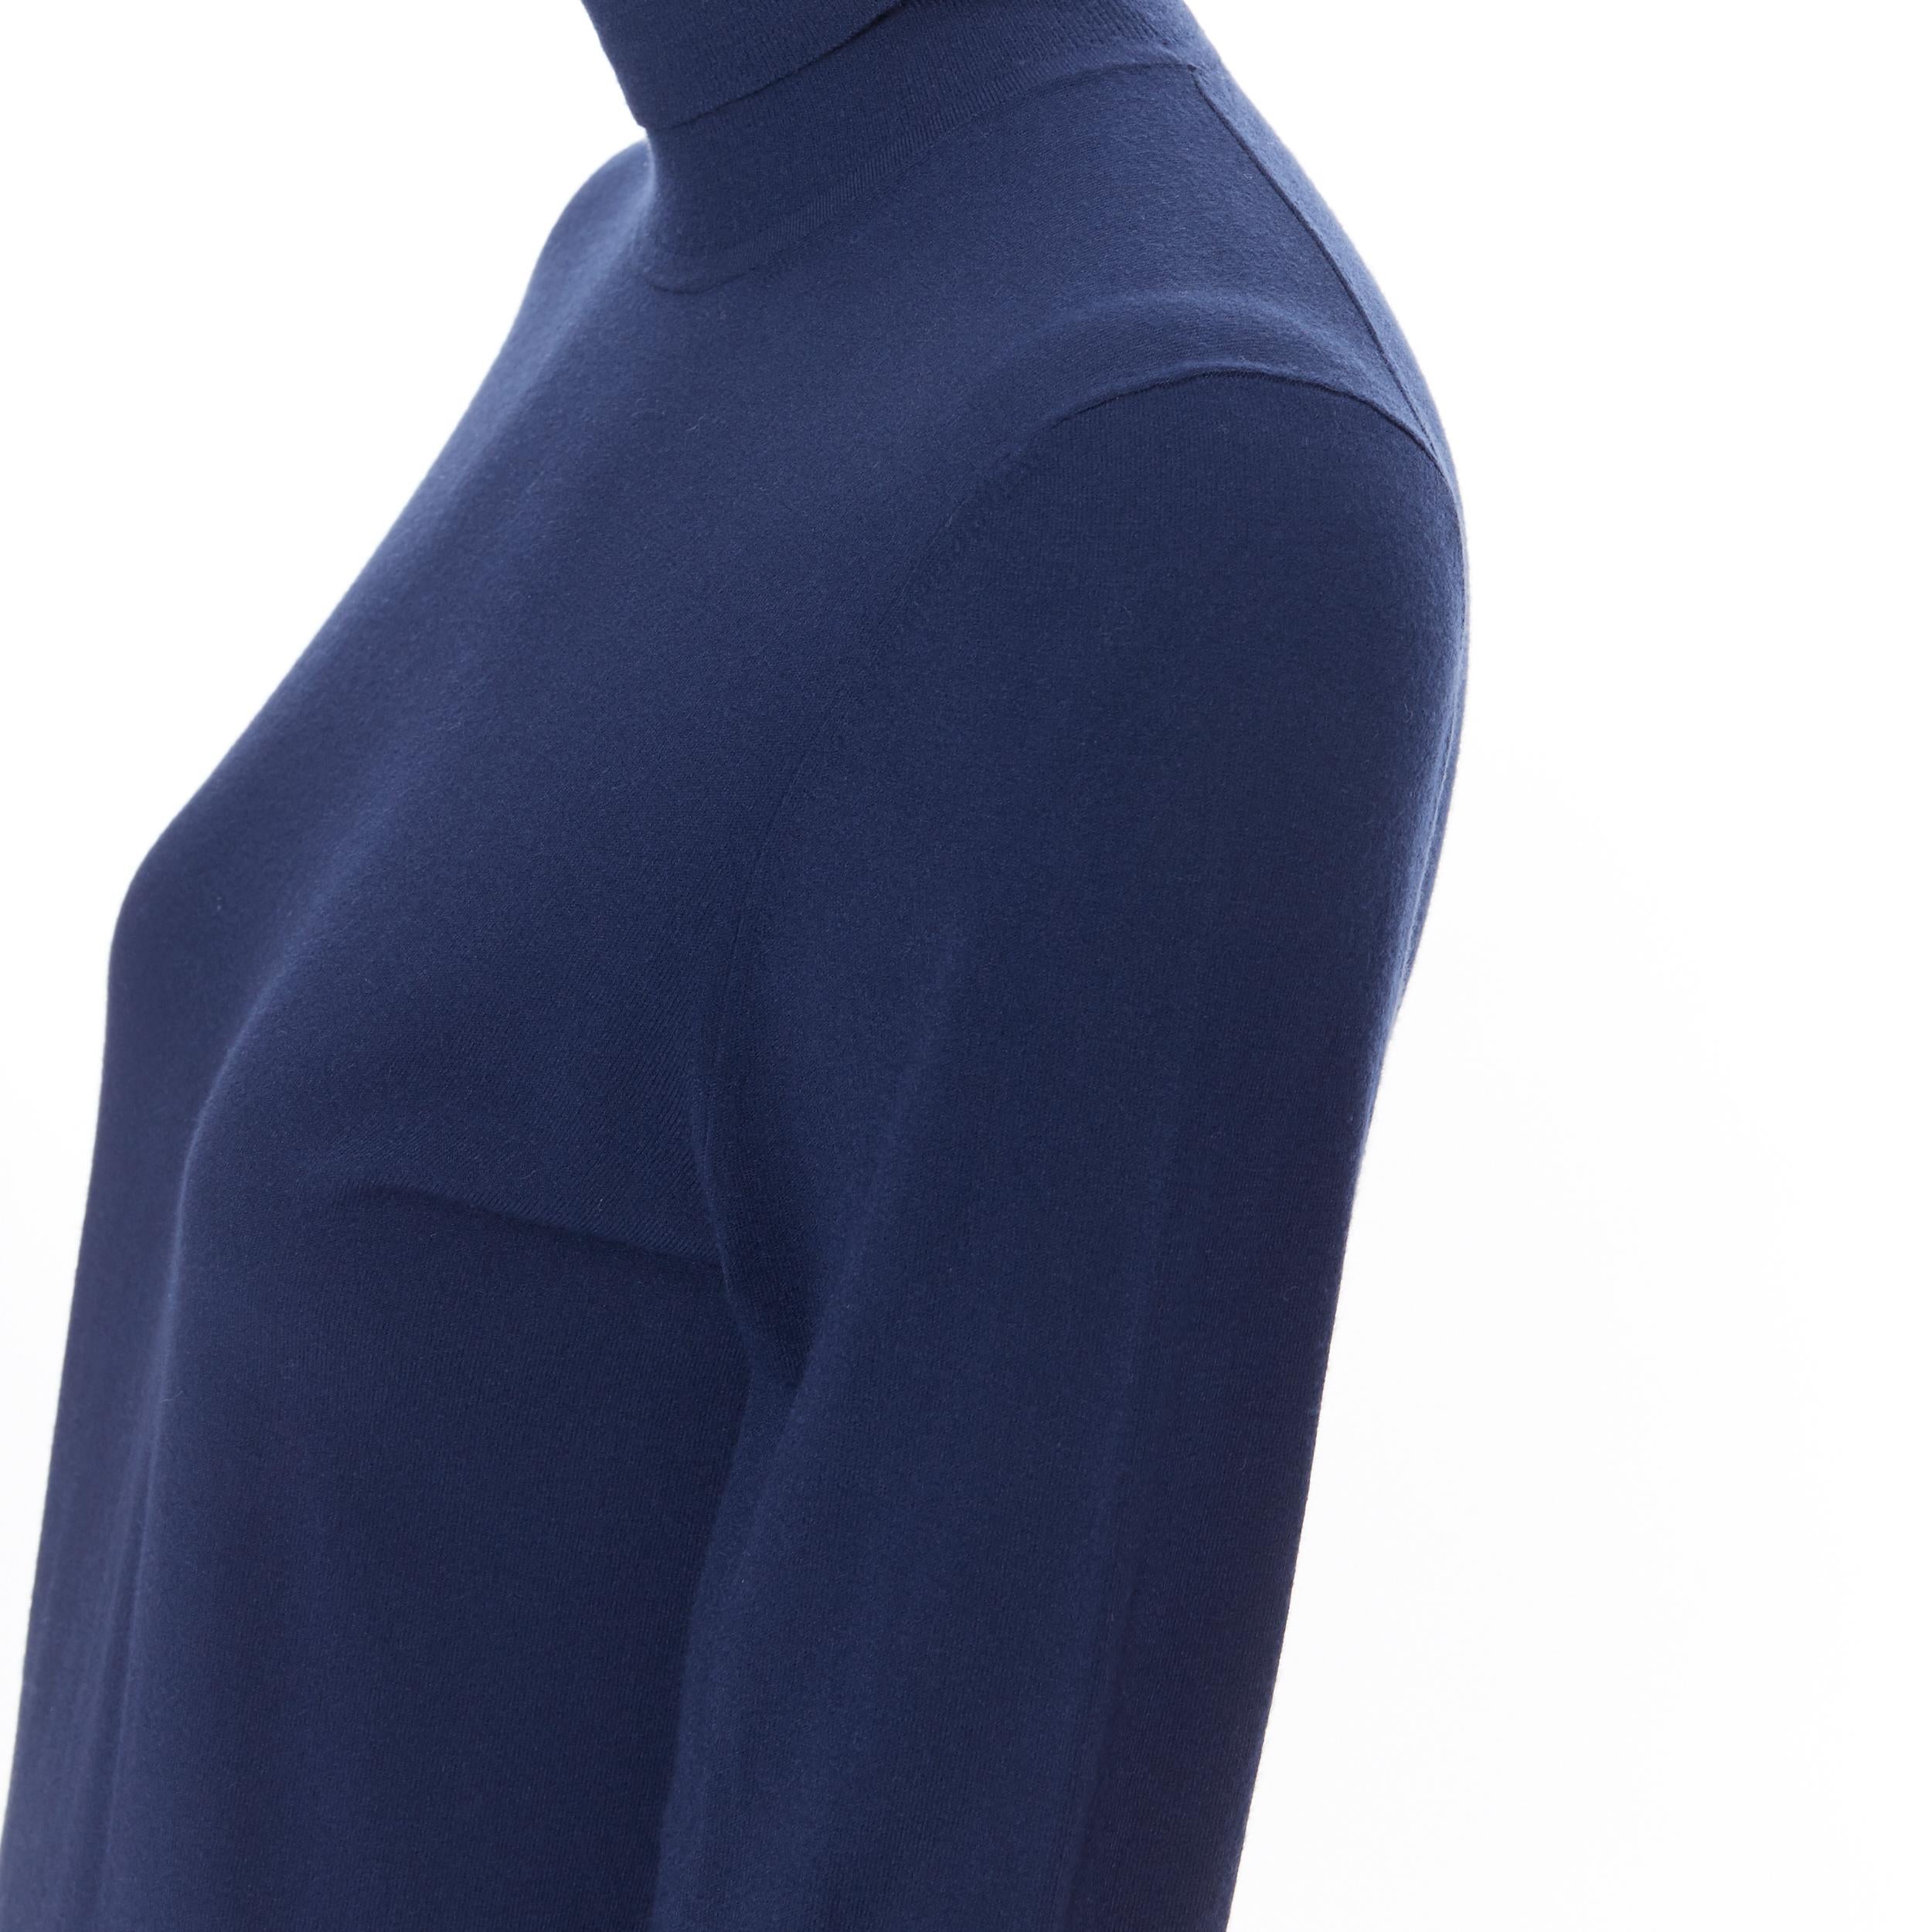 Women's MICHAEL KORS COLLECTION navy blue minimalist short fit turtleneck sweater top XS